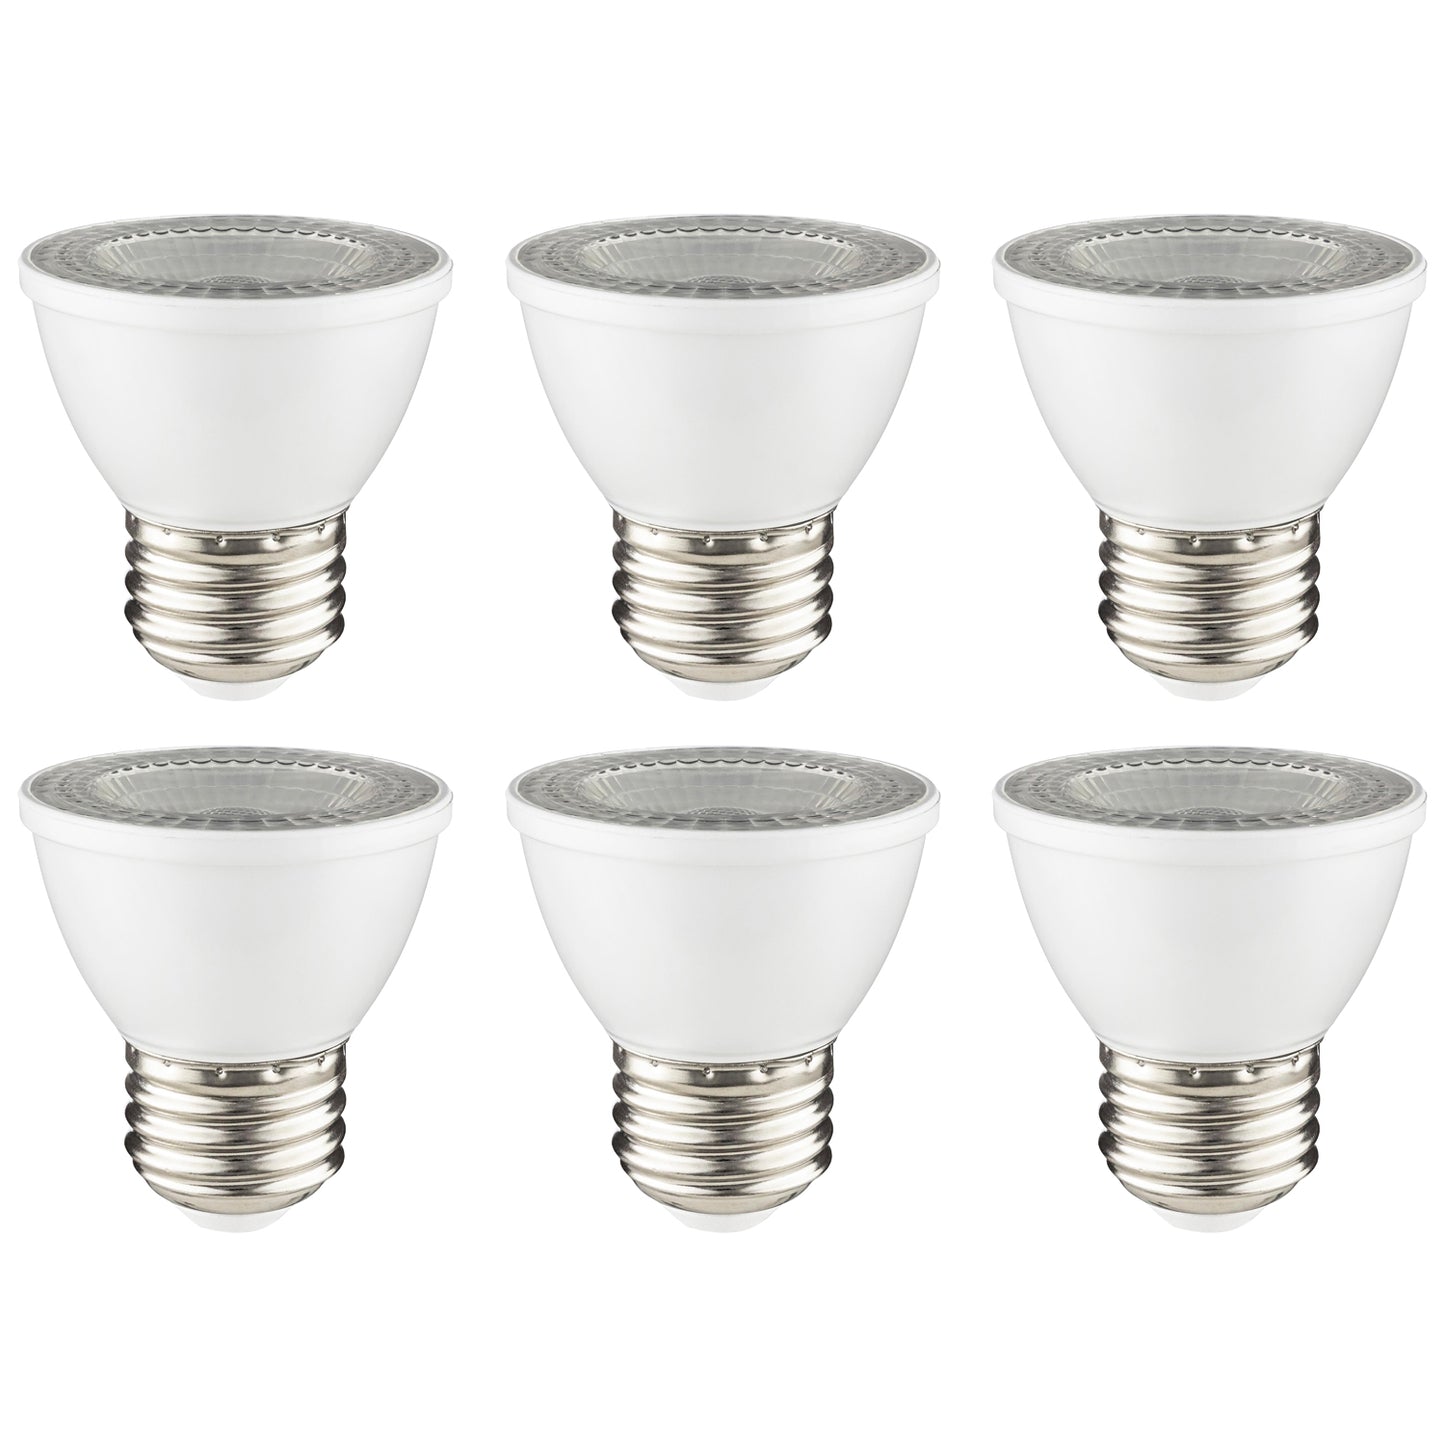 Sunlite 80143-SU LED MR16 E26 Light Bulb 50-Watt Equivalent, Dimmable, Super White